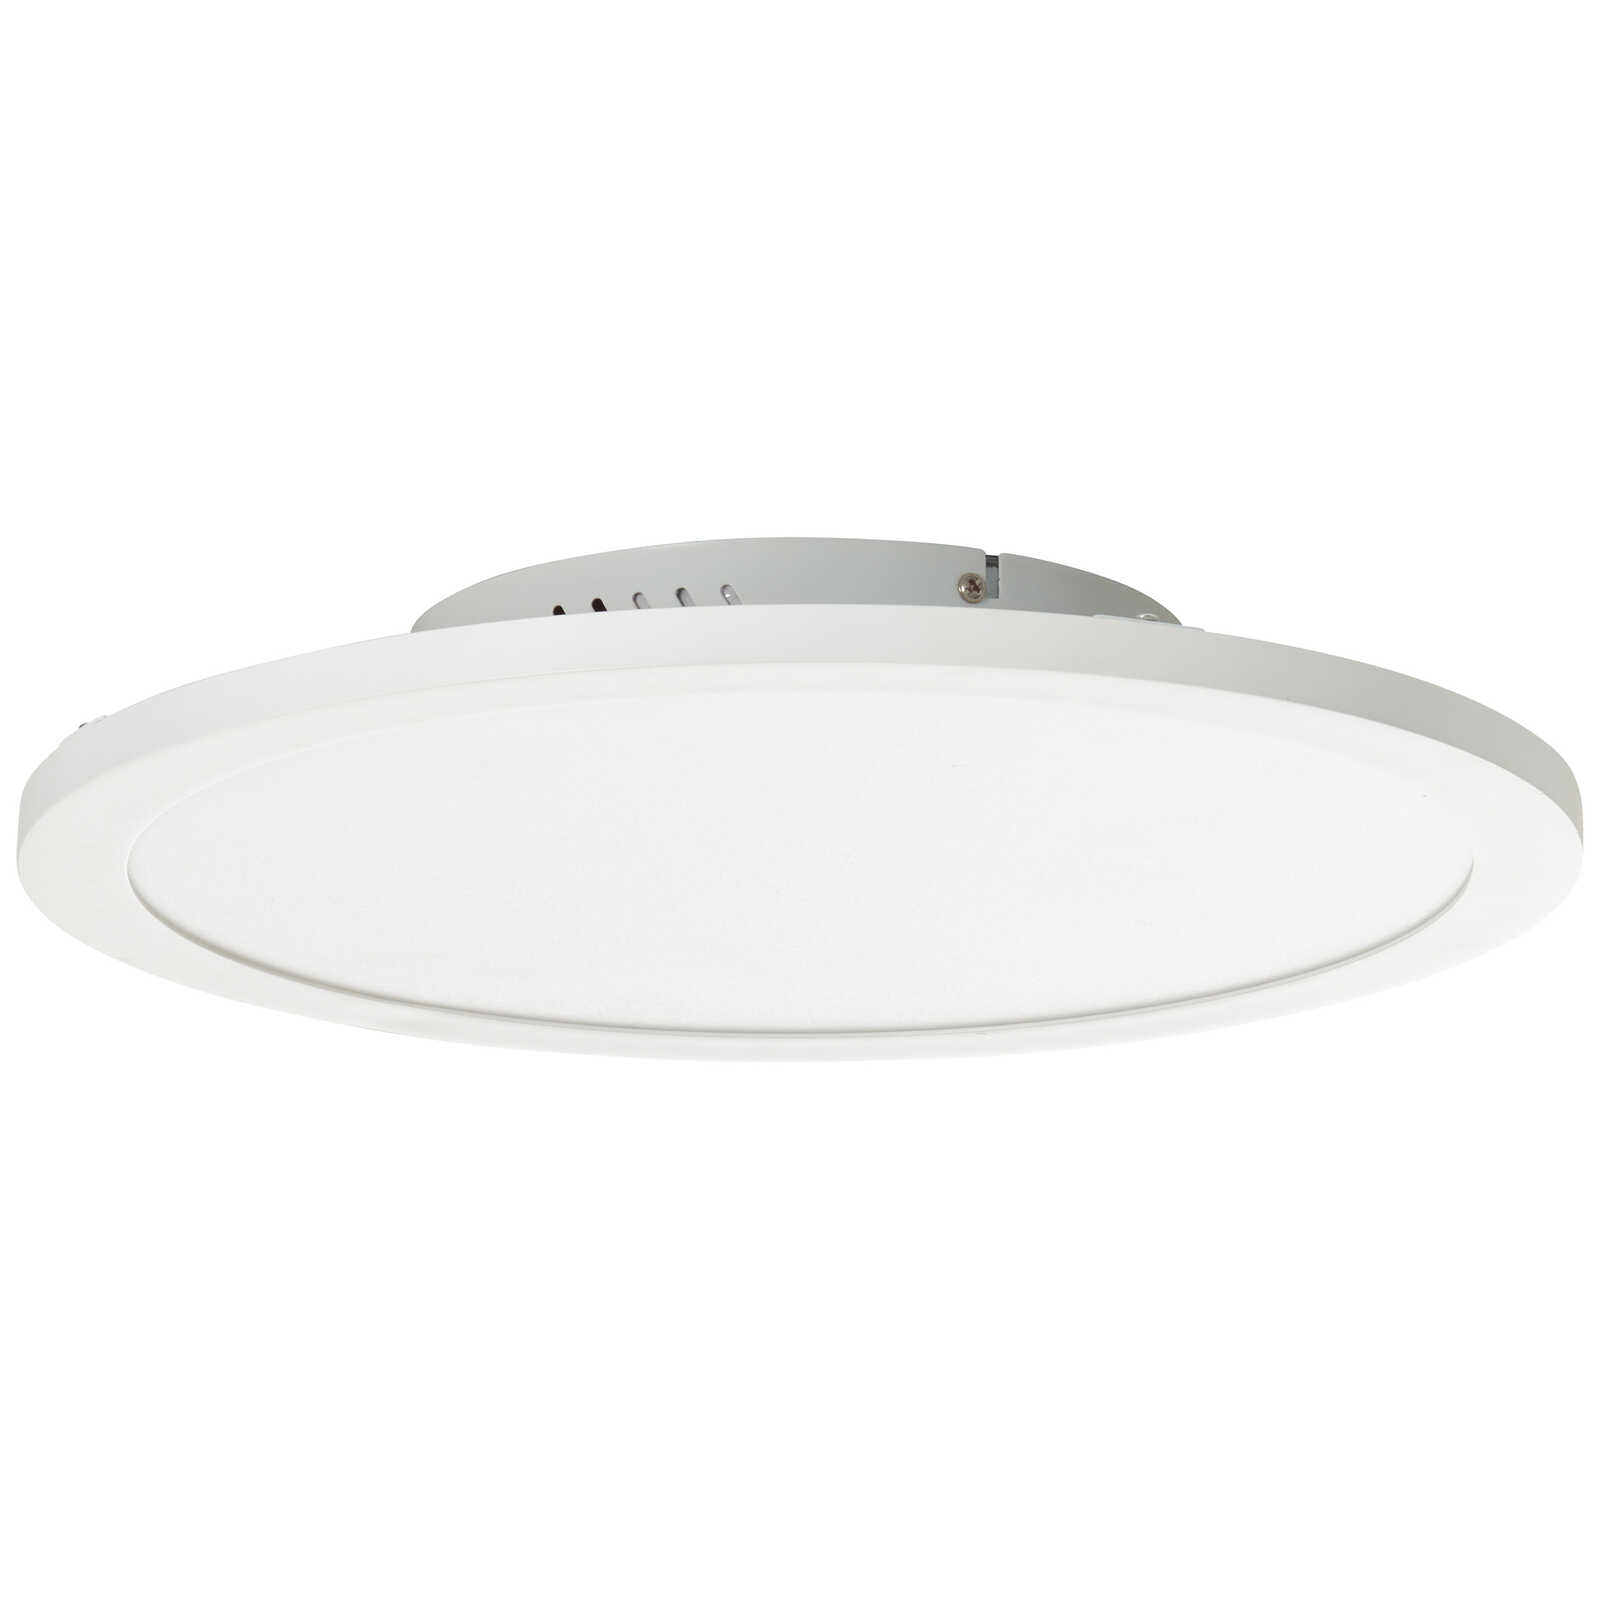             Plastic ceiling light - Aaron 3 - White
        